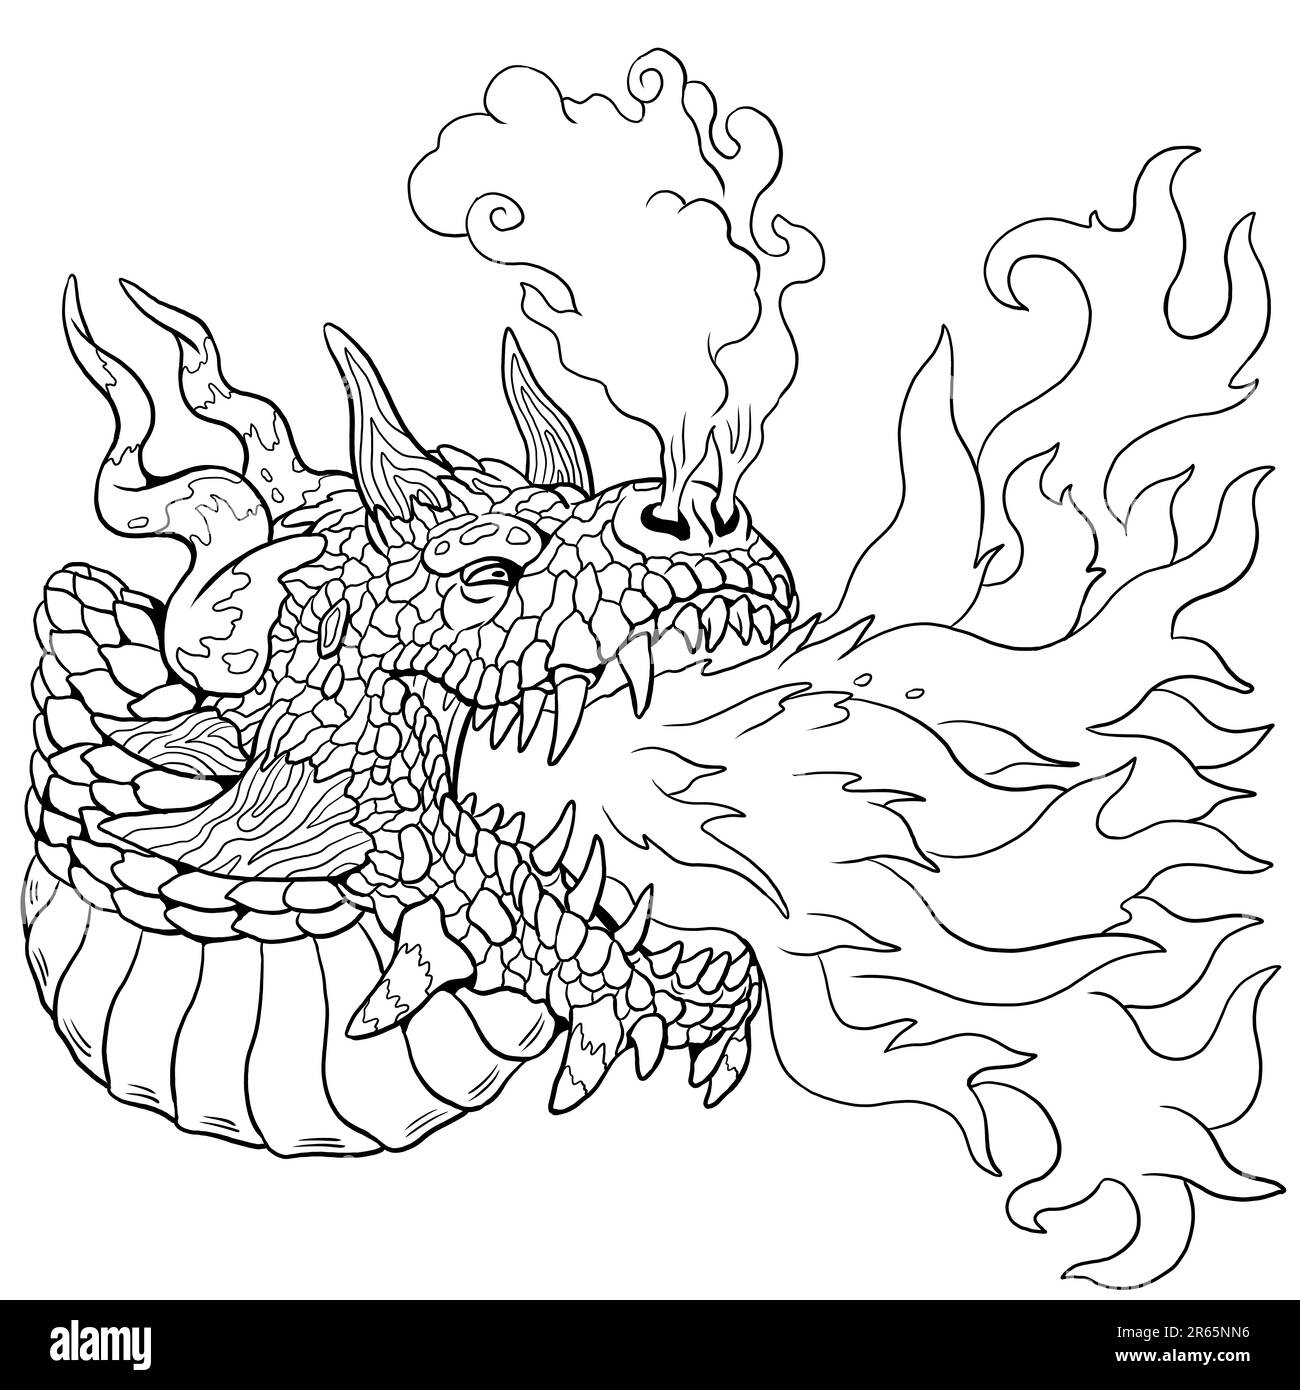 Dragon coloring pages hi